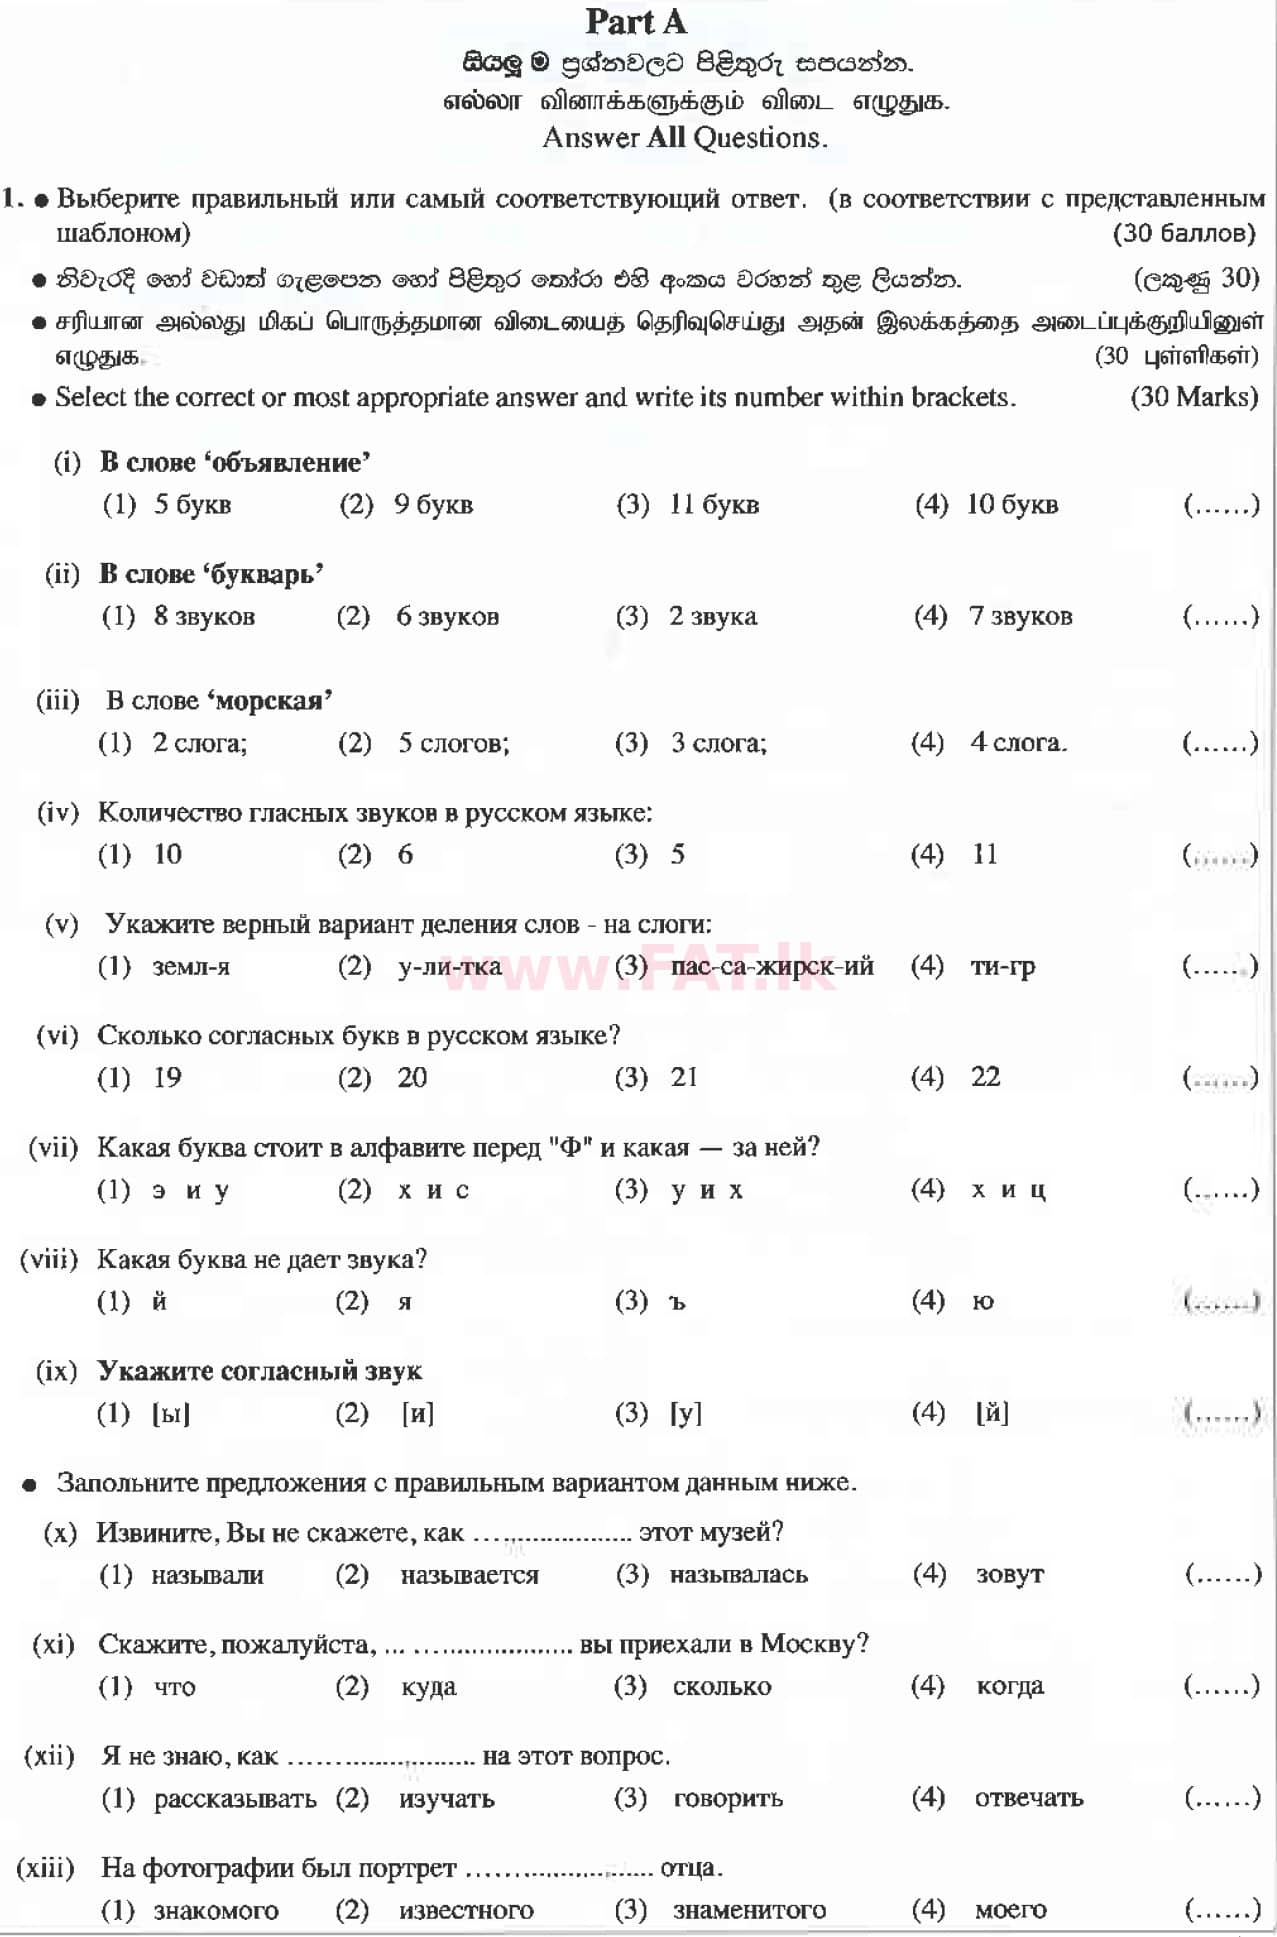 National Syllabus : Ordinary Level (O/L) Russian Language - 2019 December - Paper (Russian (Русский) Medium) 1 1